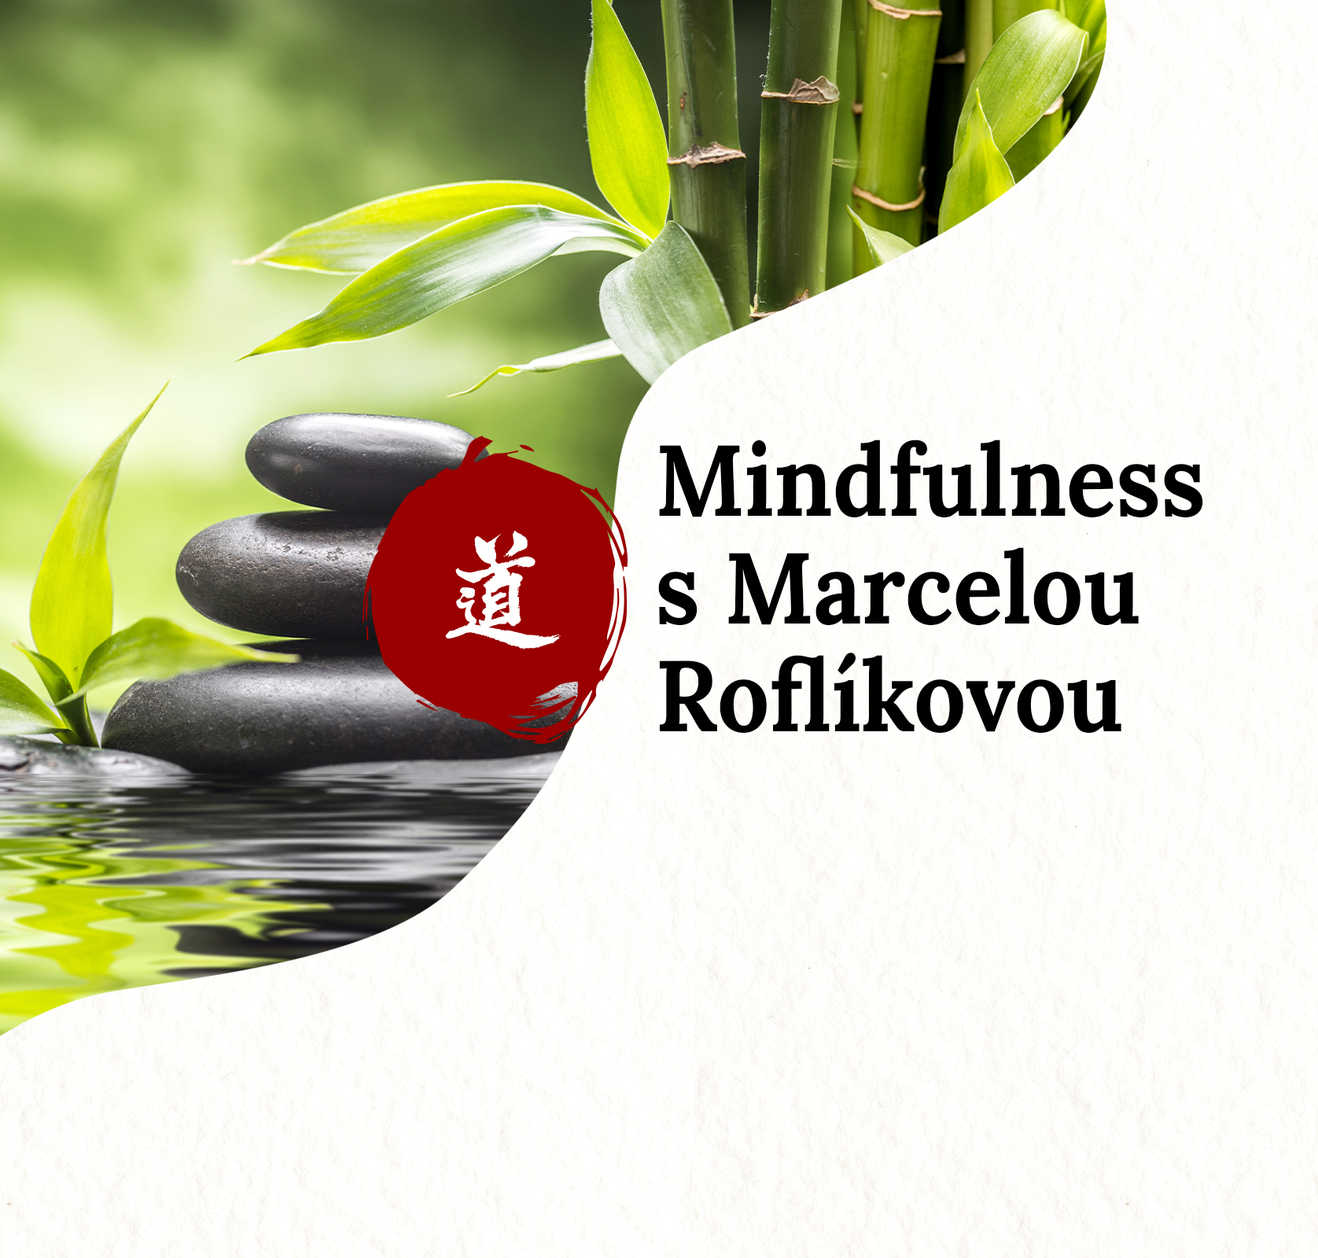 Mindfulness - paradox mindfulness